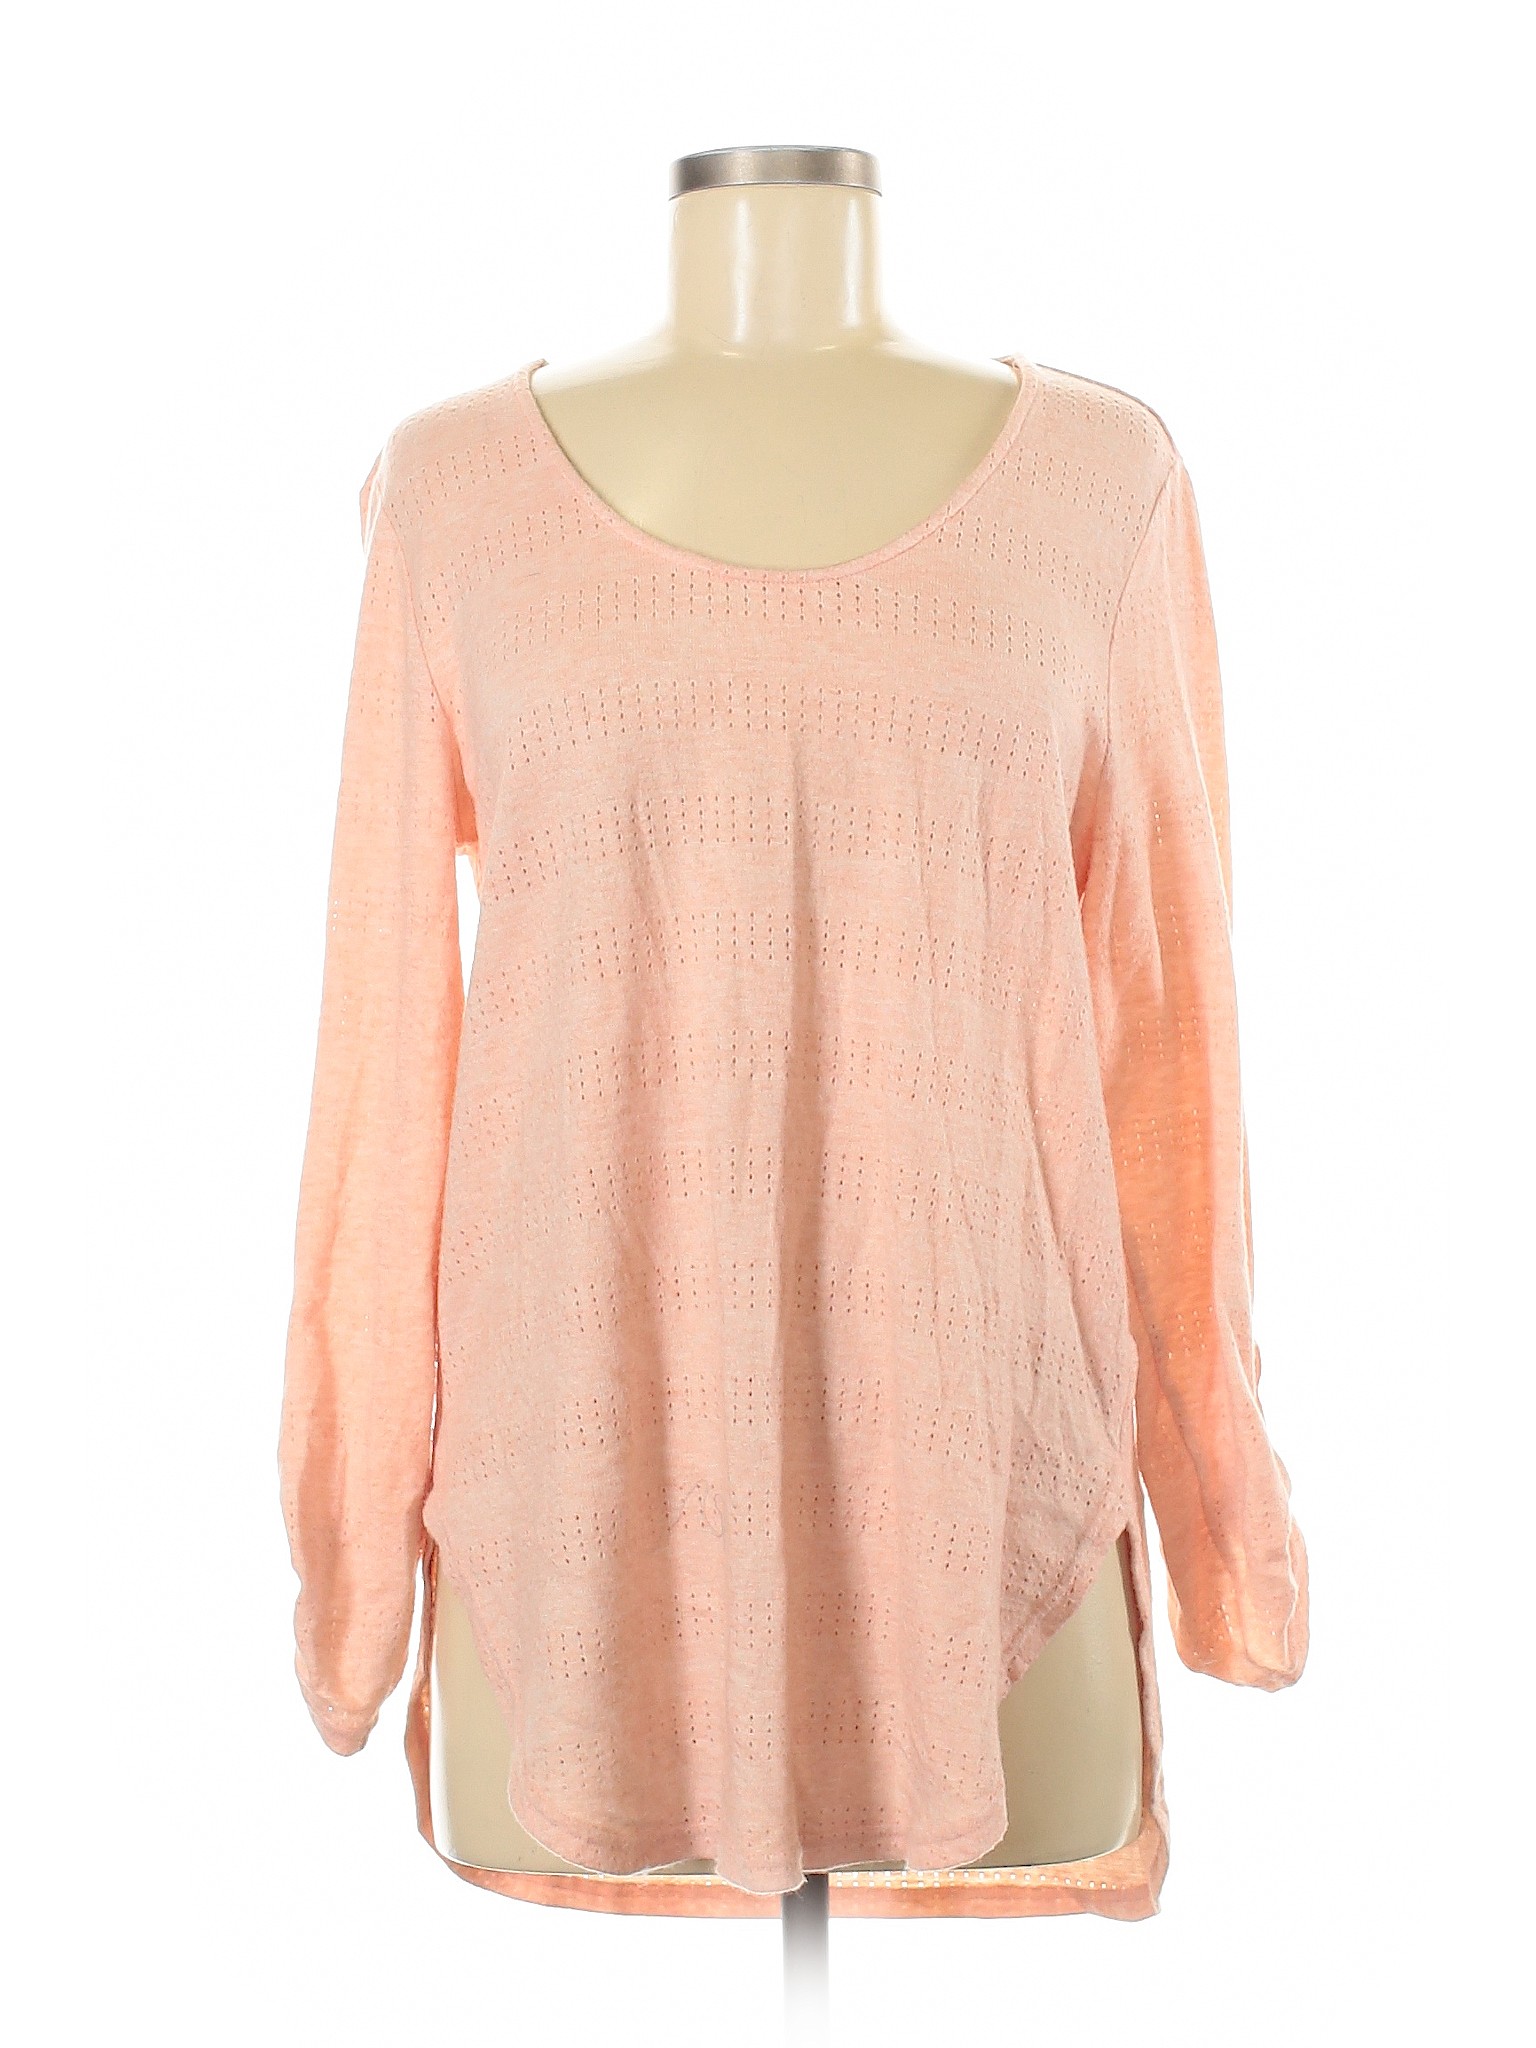 Anthropologie Women Pink Pullover Sweater M | eBay